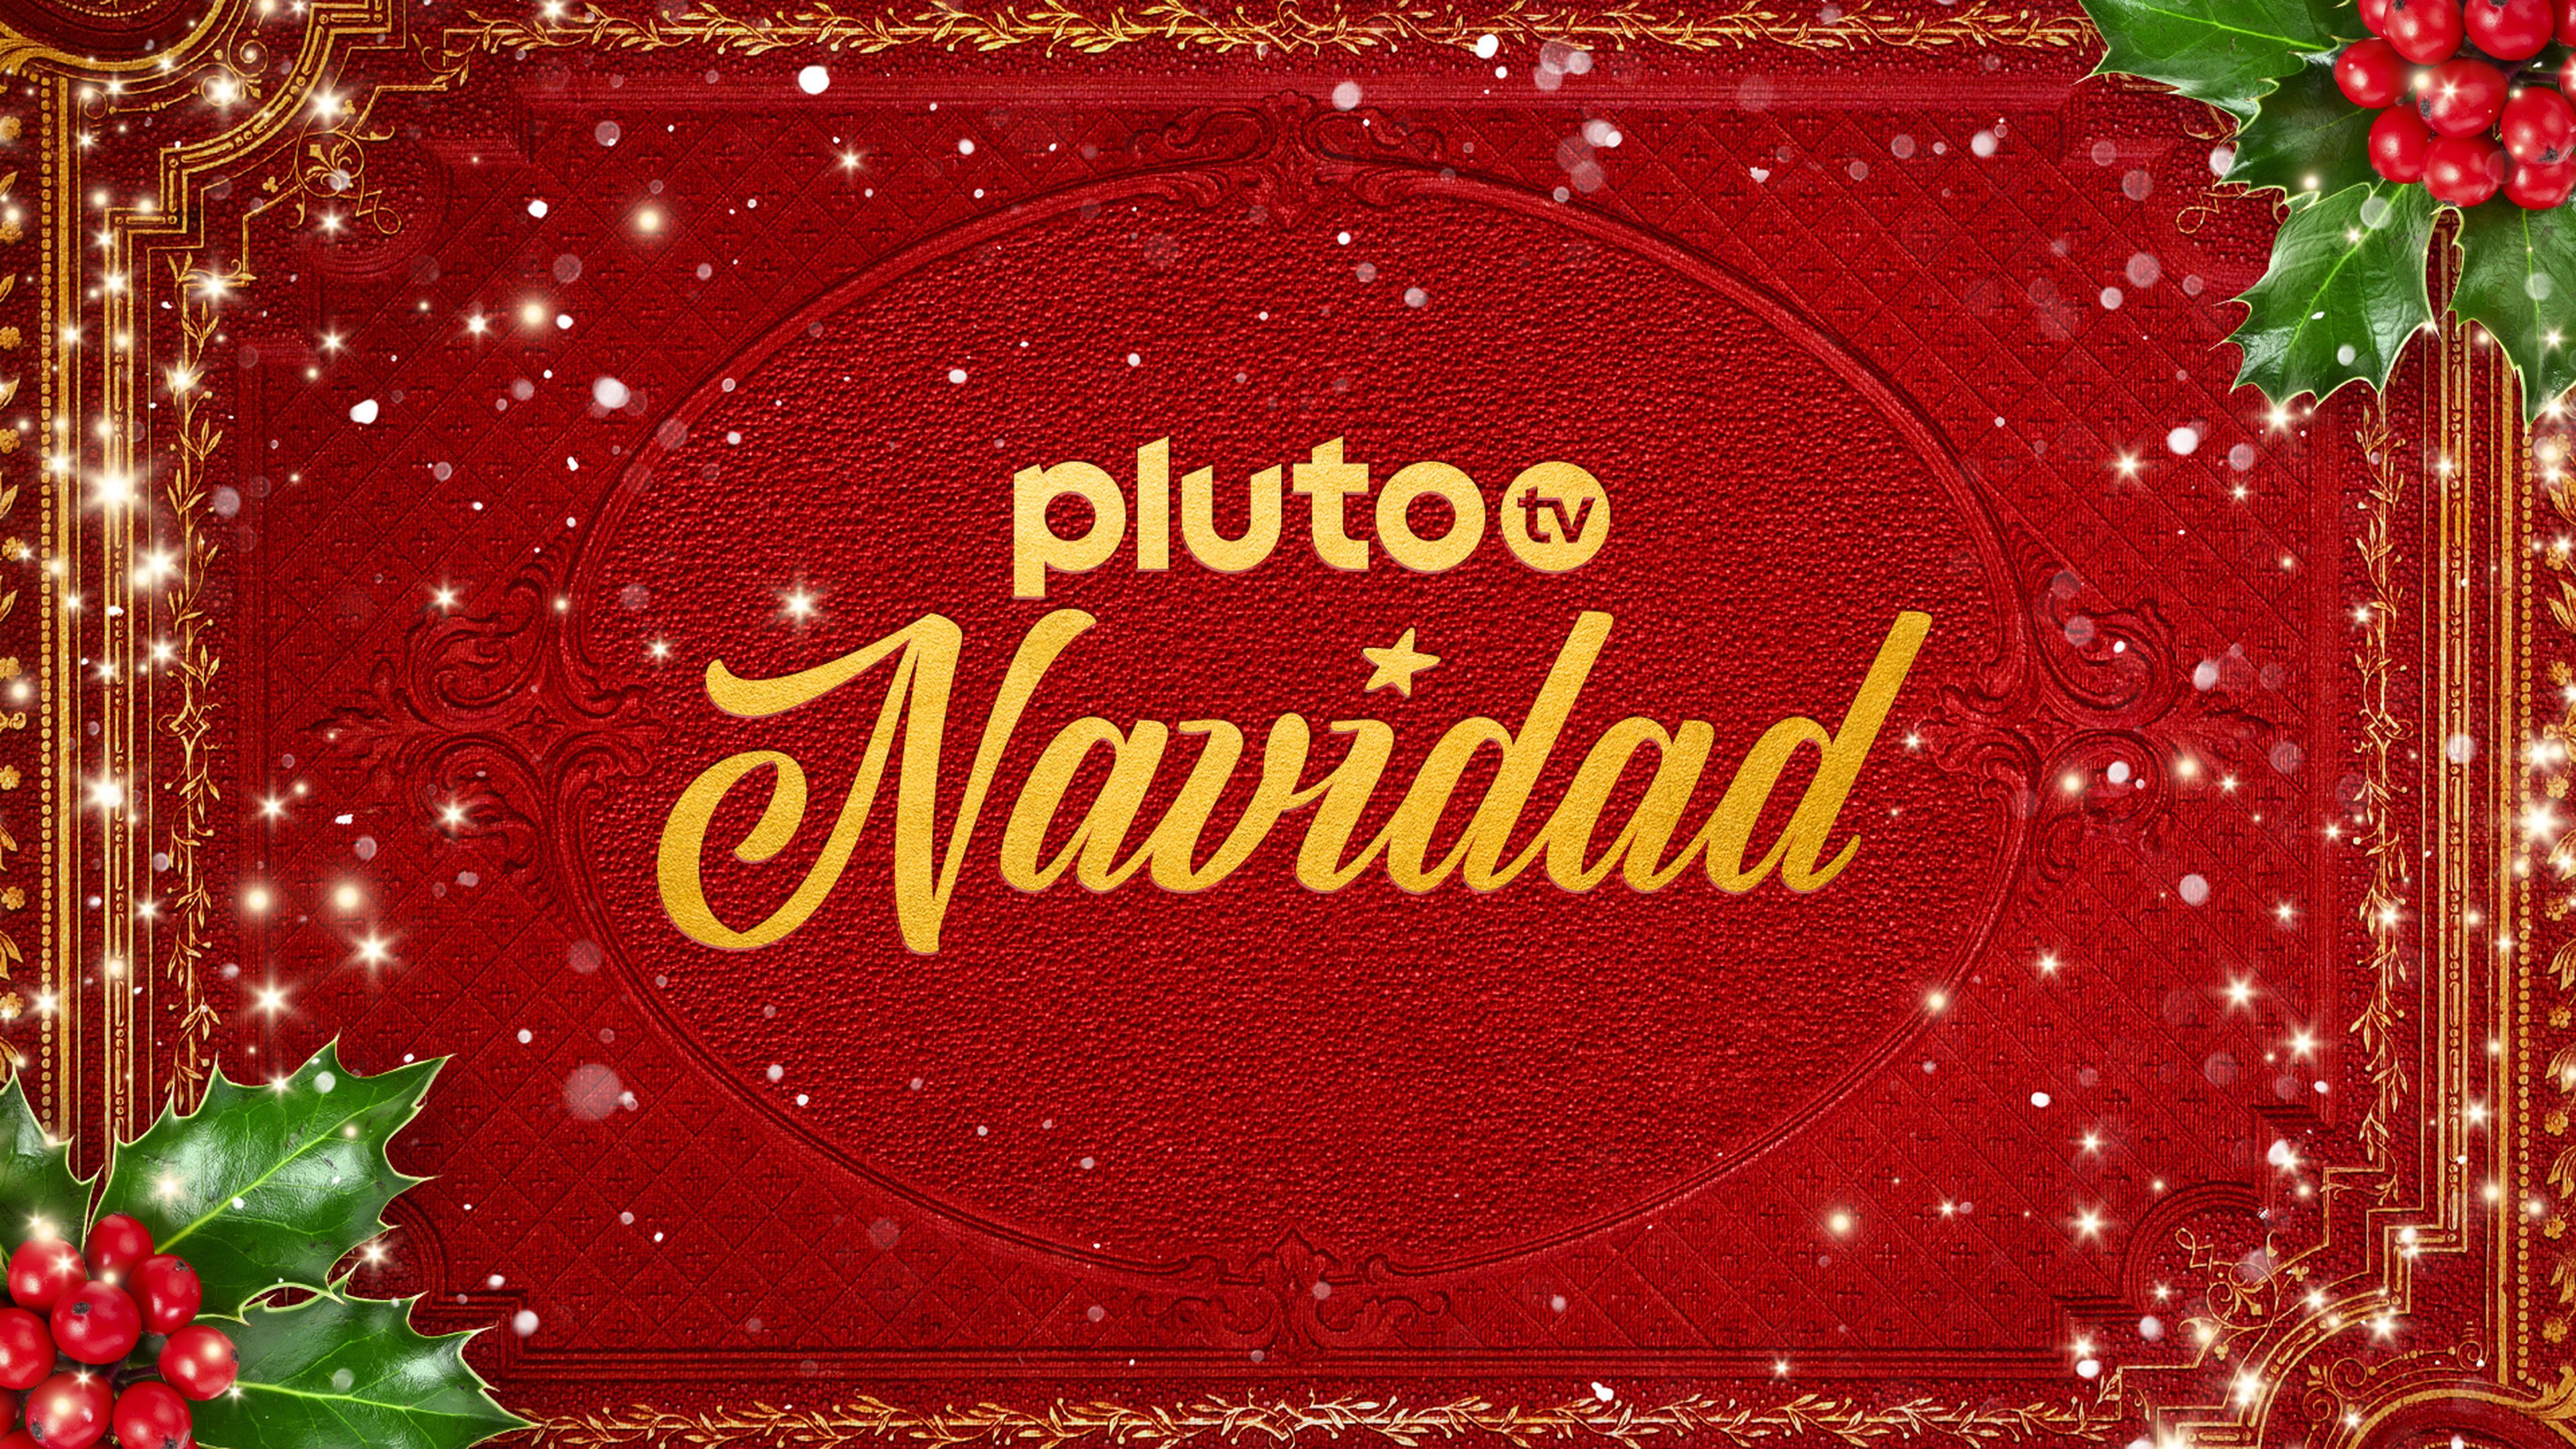 Pluto TV Navidad